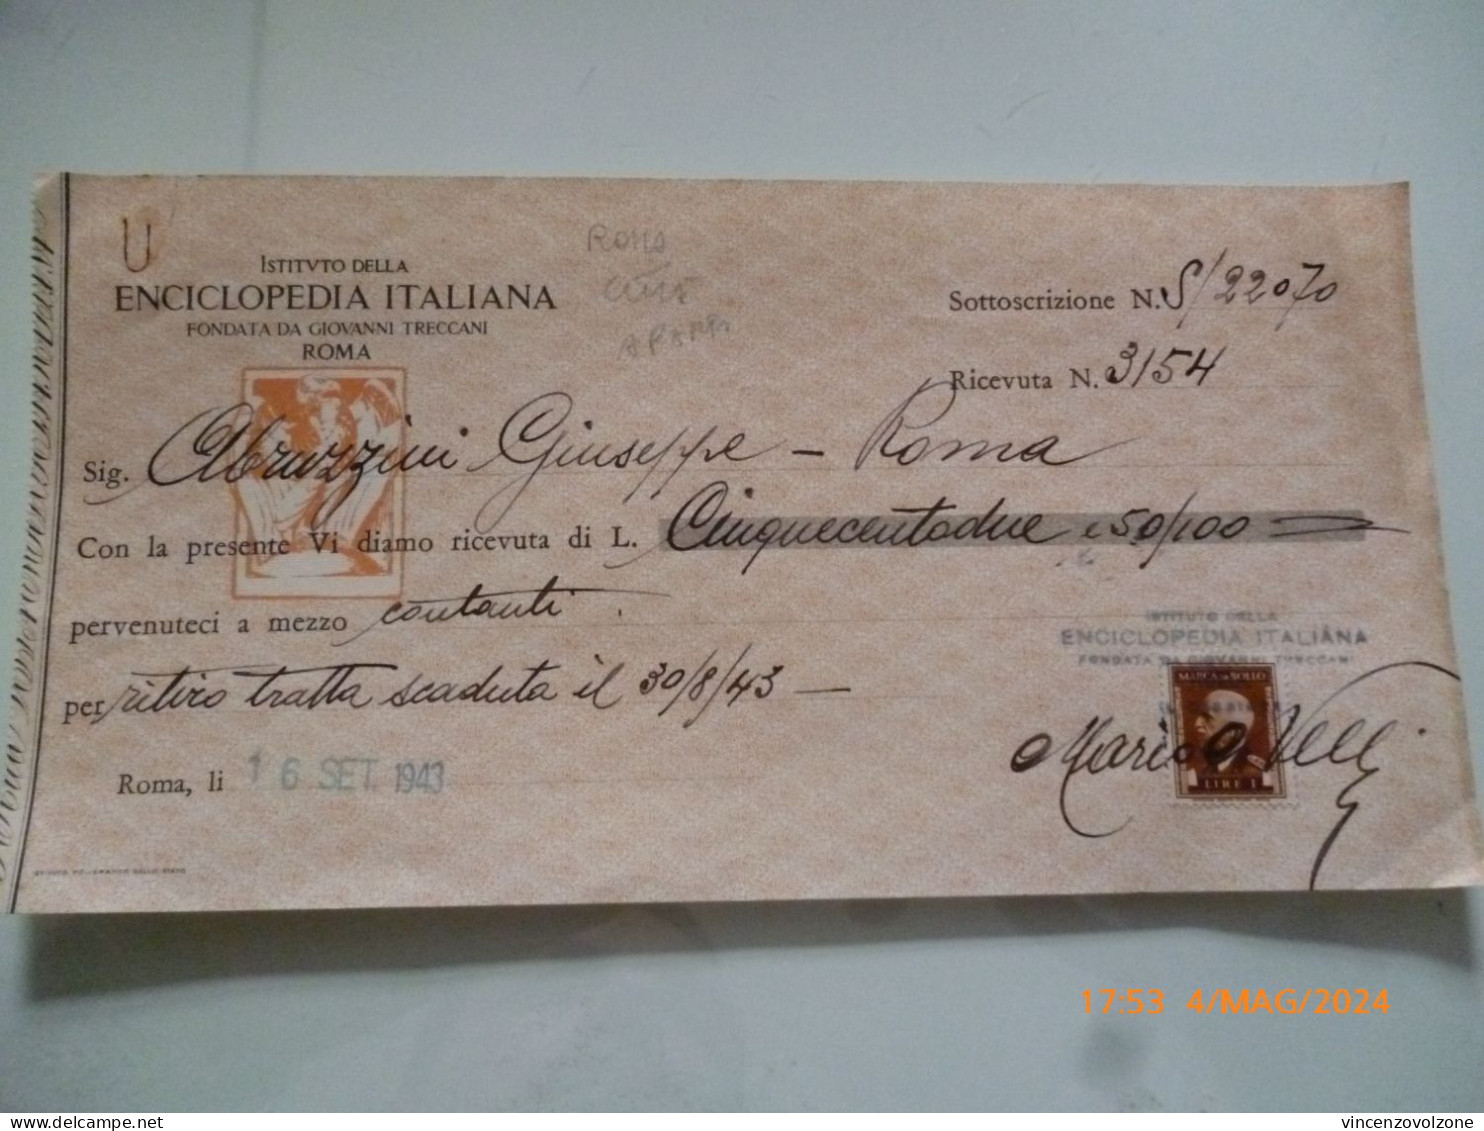 Ricevuta "ENCICLOPEDIA ITALIANA TRECCANI ROMA" 1943 - Italien